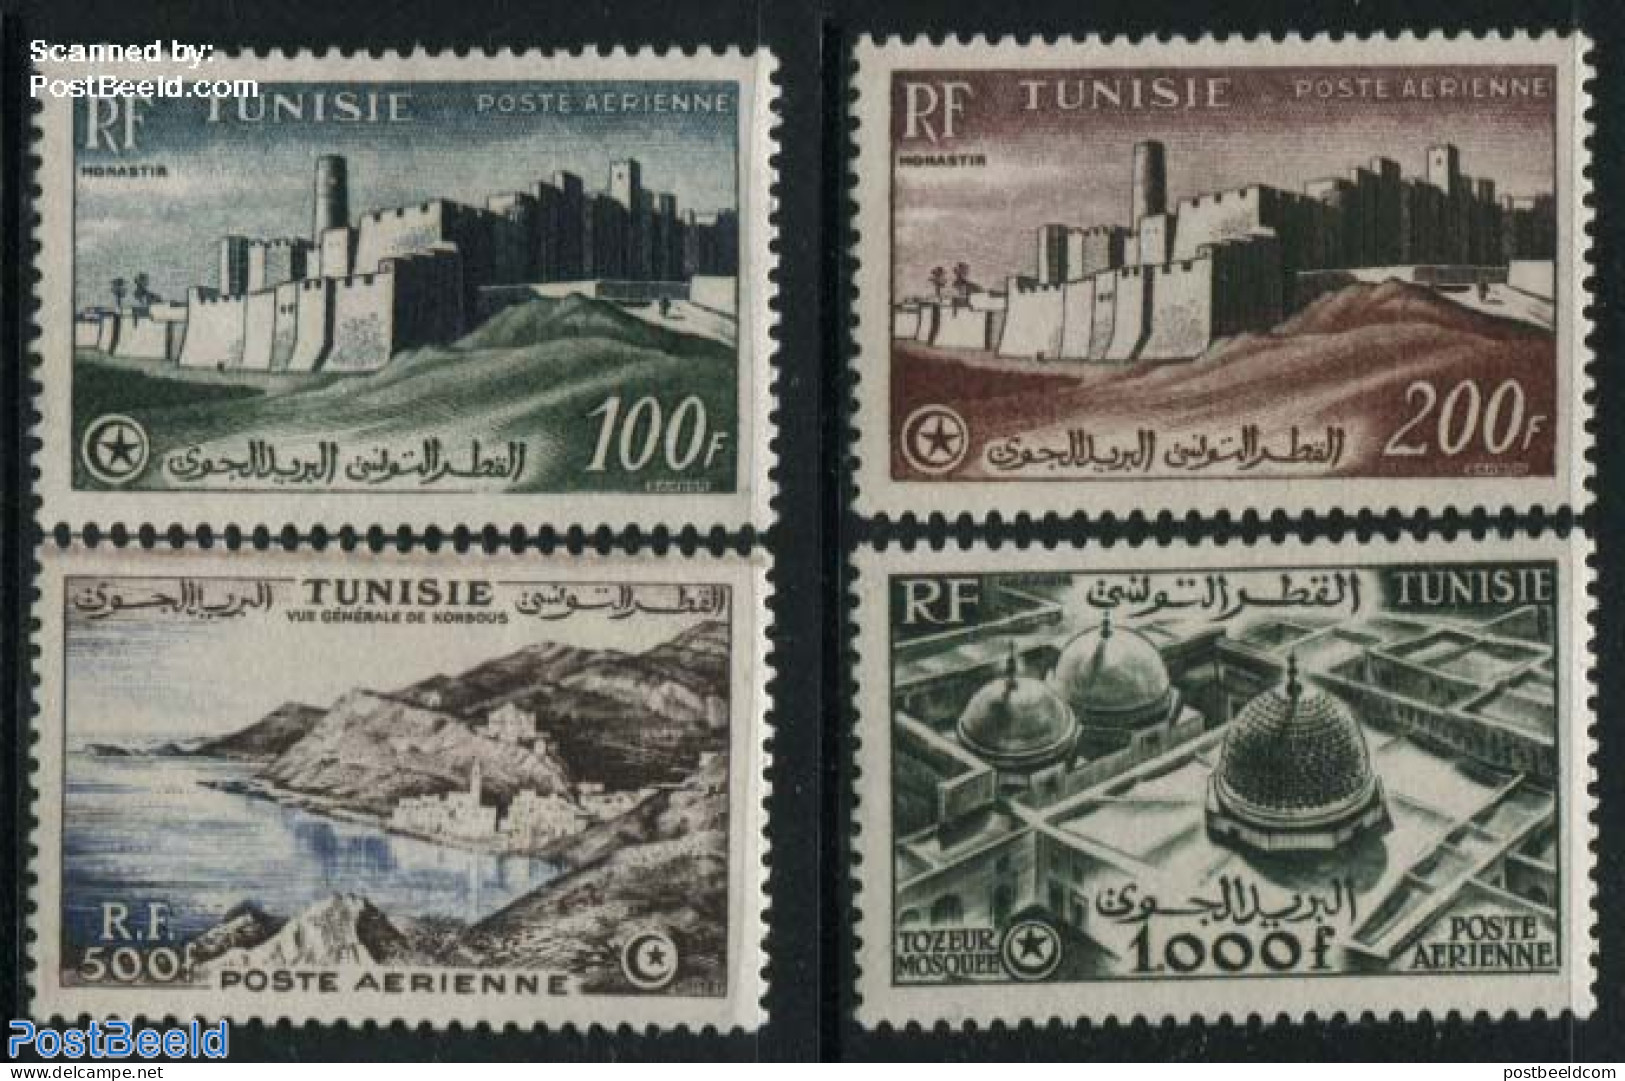 Tunisia 1953 Definitives 4v (with RF), Unused (hinged), Art - Castles & Fortifications - Castillos